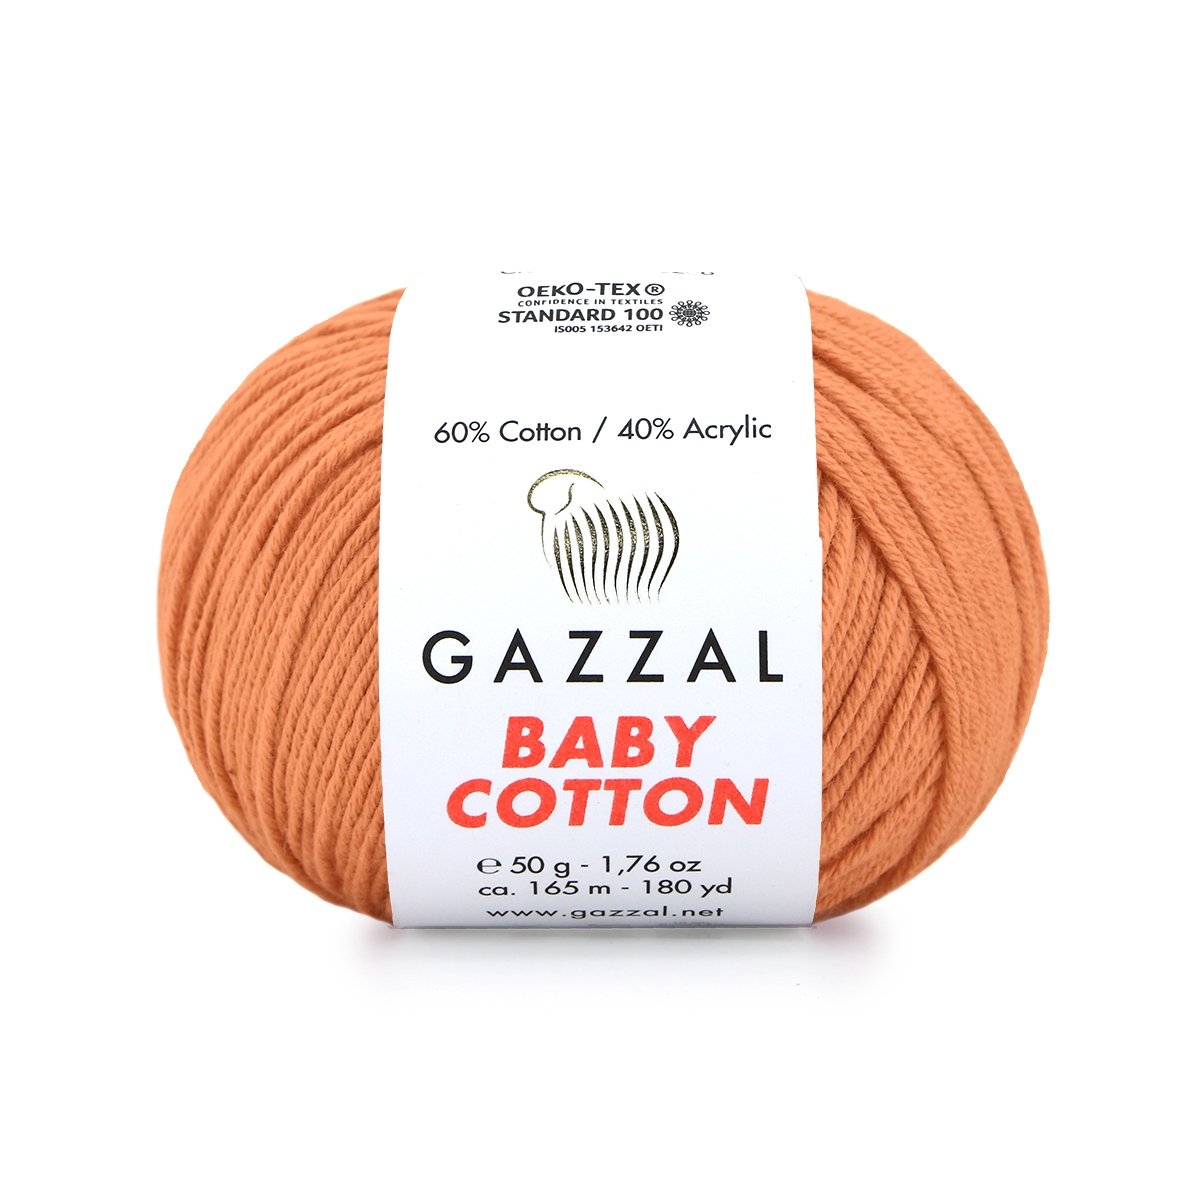 Baby Cotton 3465 - 1